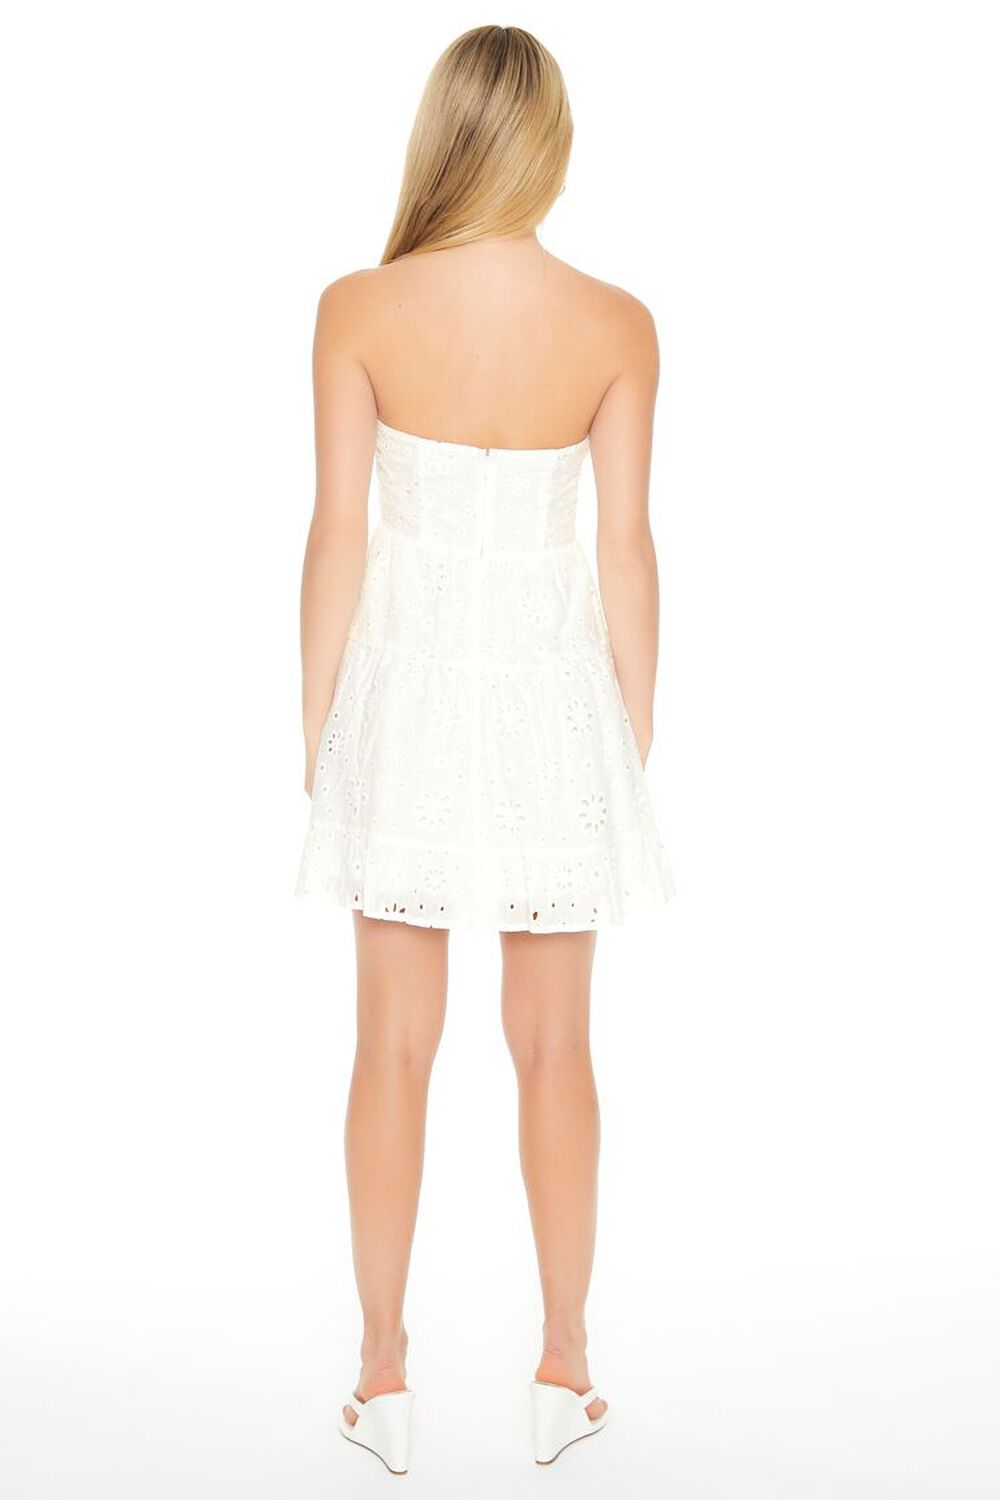 WHITE Strapless Eyelet Bustier Mini Dress, image 3